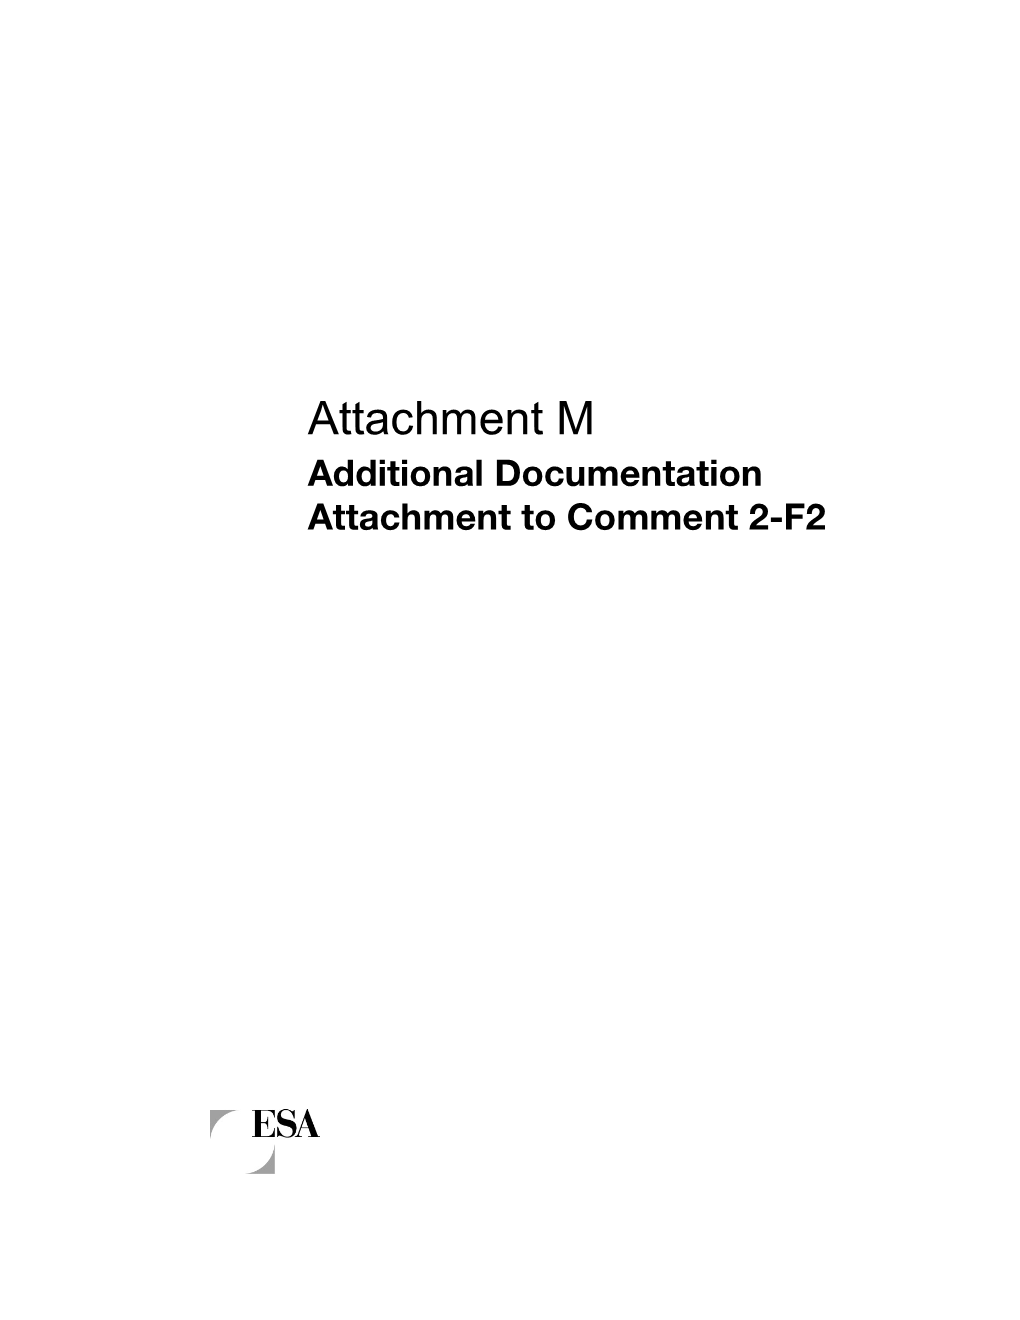 Attachment M Additional Documentation Attachment to Comment Letter 2-F2